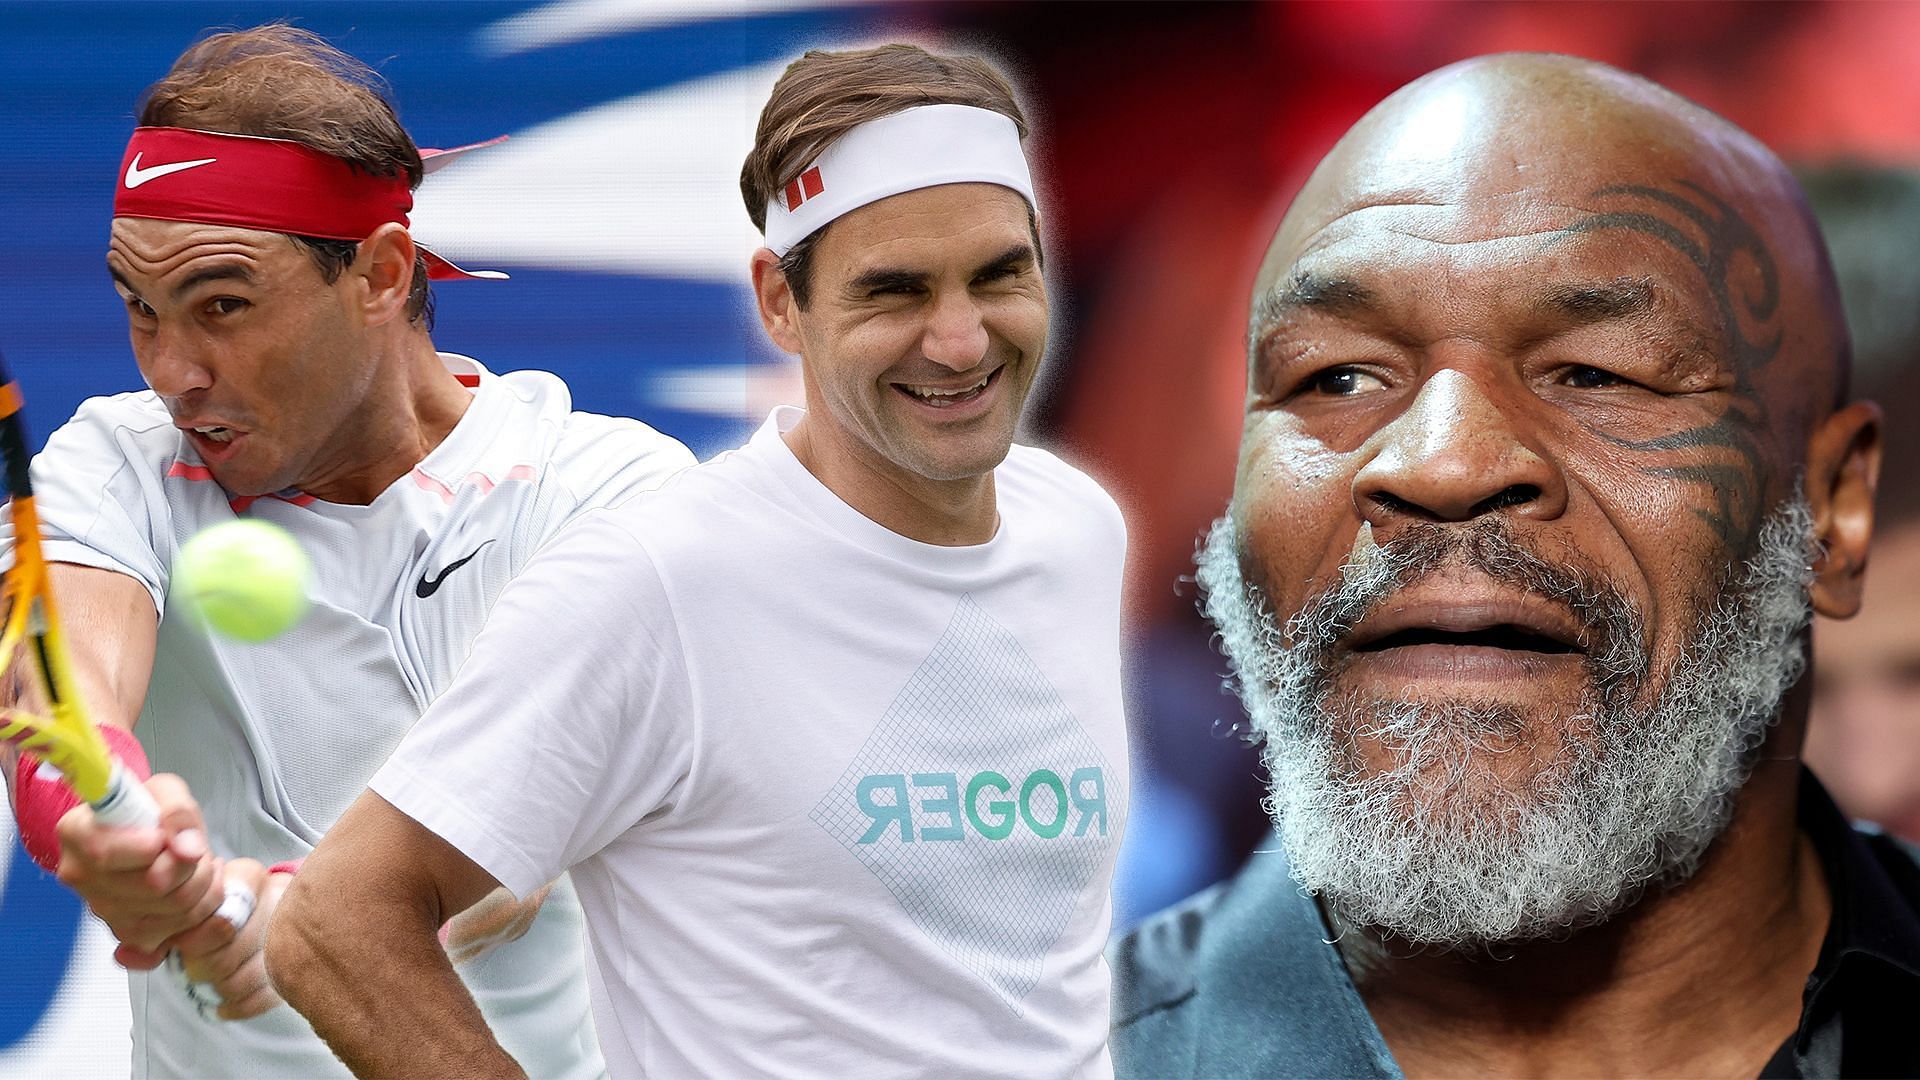 Mike Tyson picks his favorite among Federer, Nadal, and Djokovic